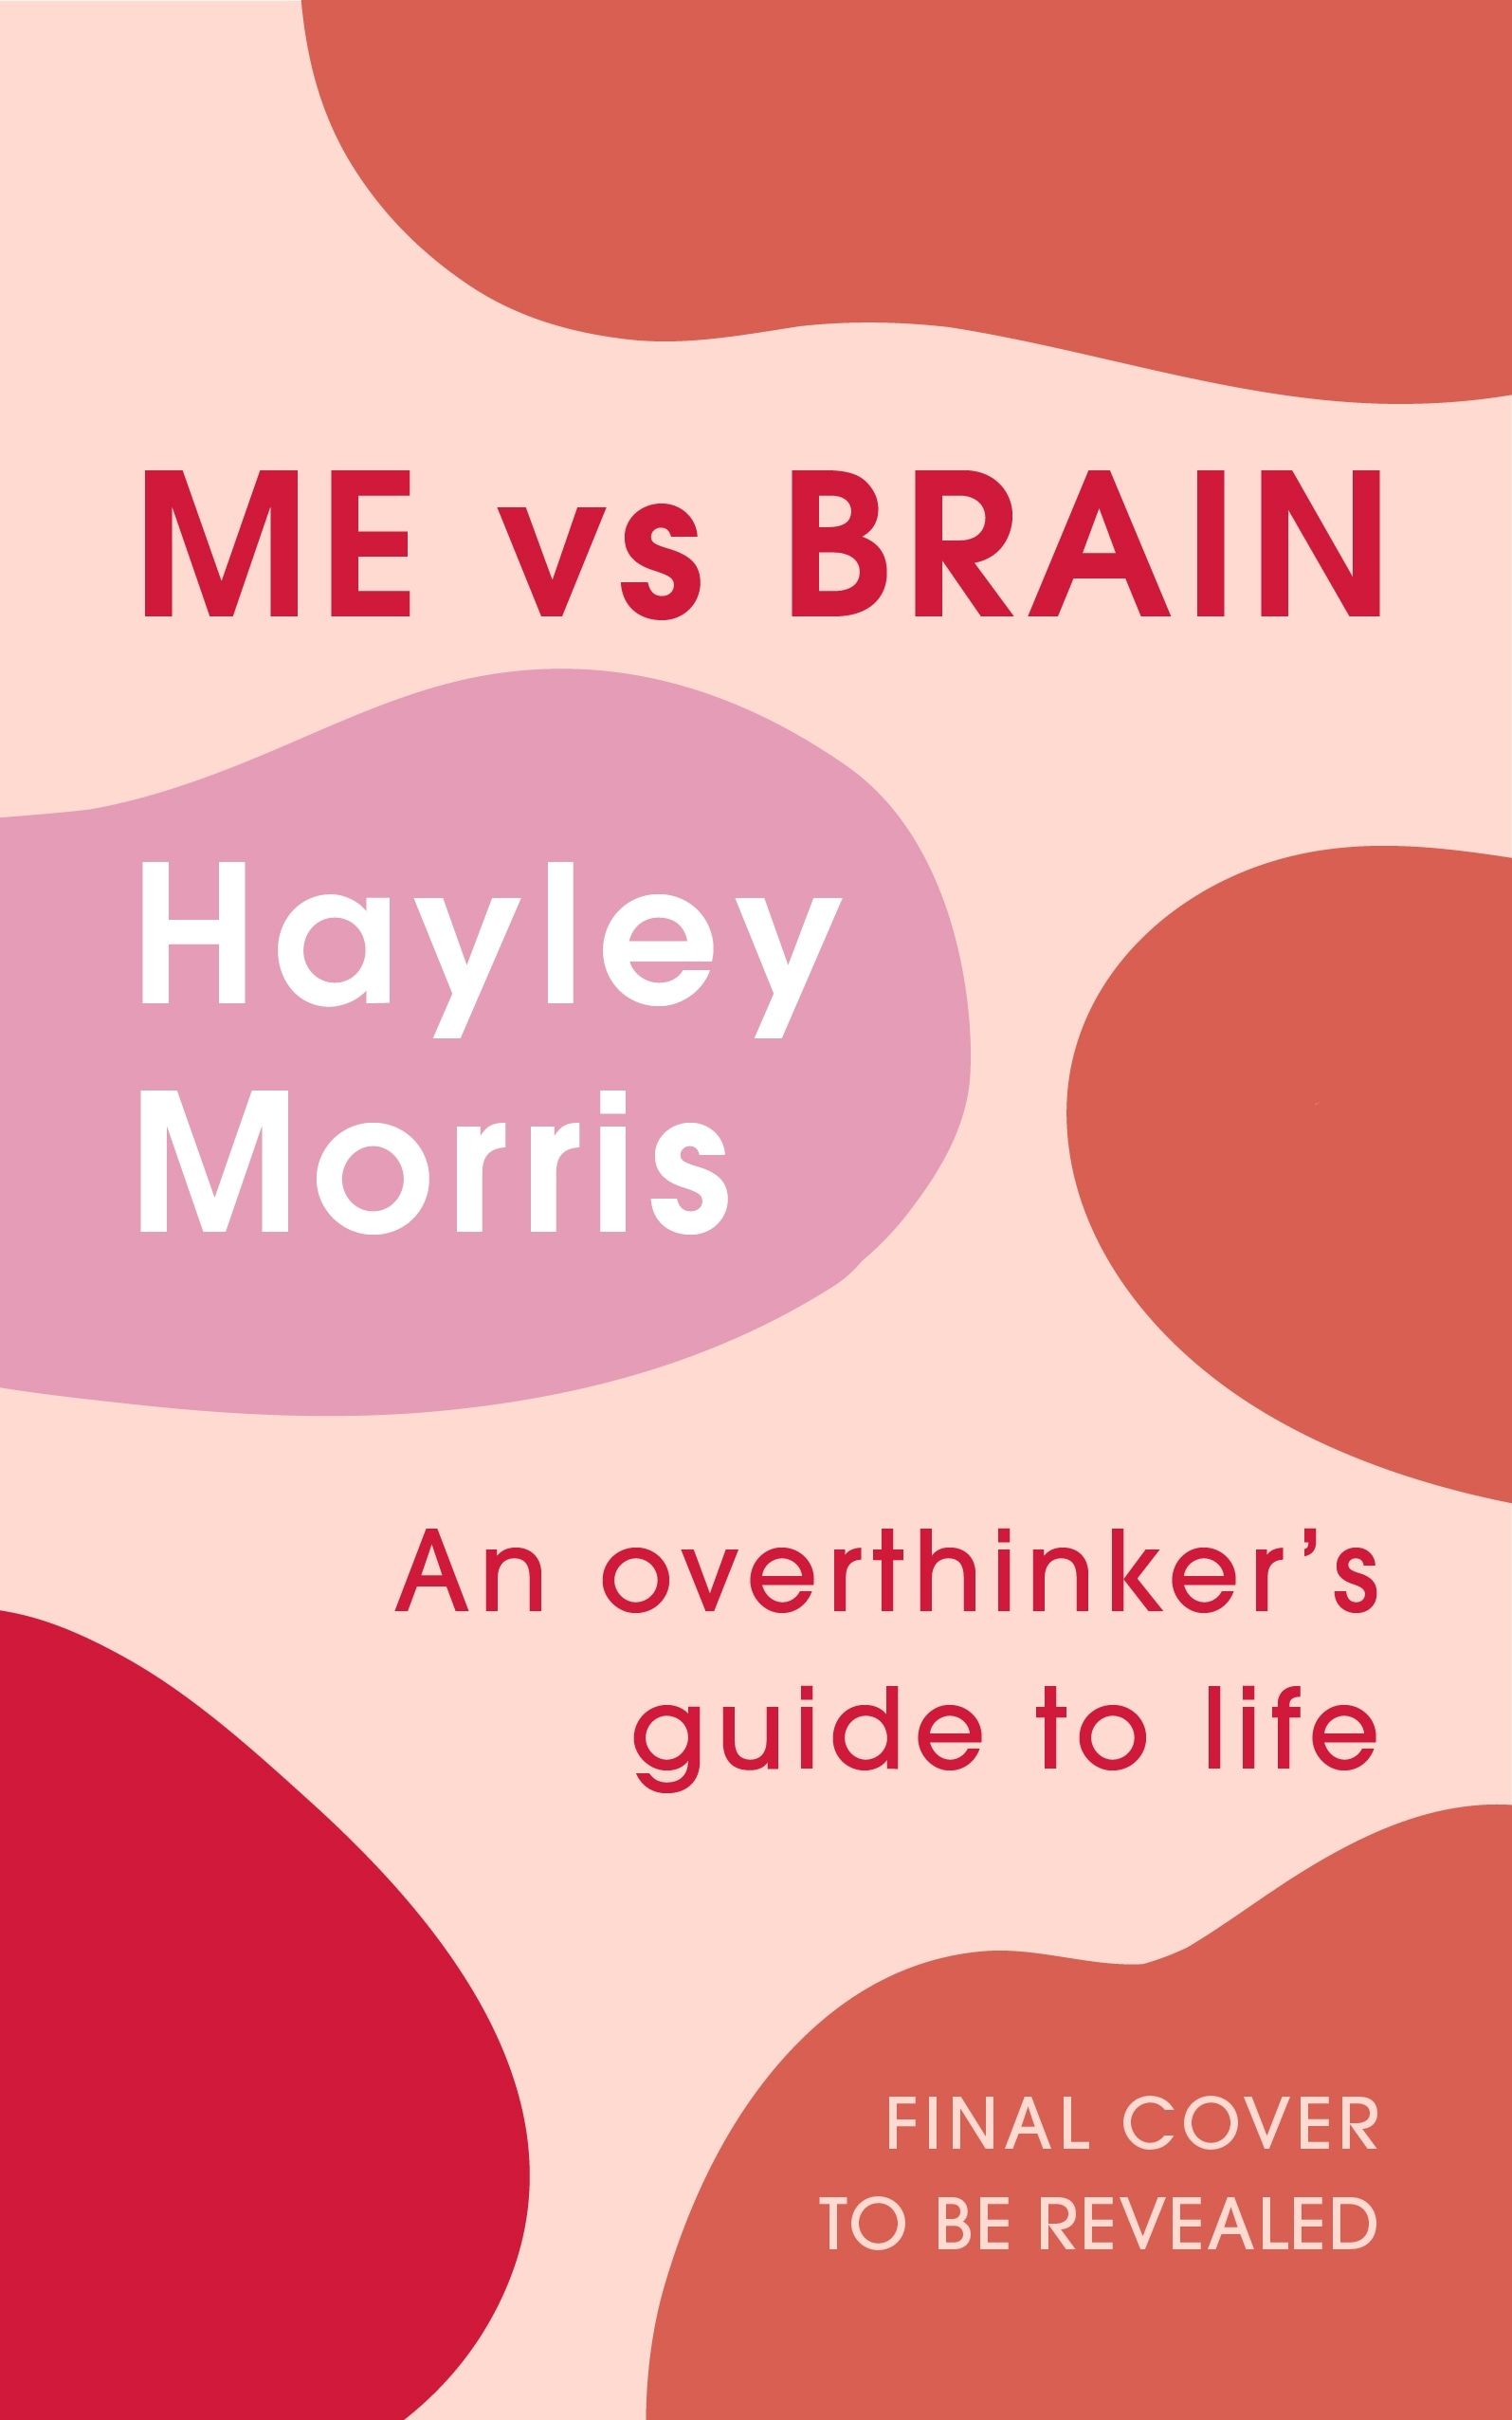 Book “Me vs Brain” by Hayley Morris — March 23, 2023